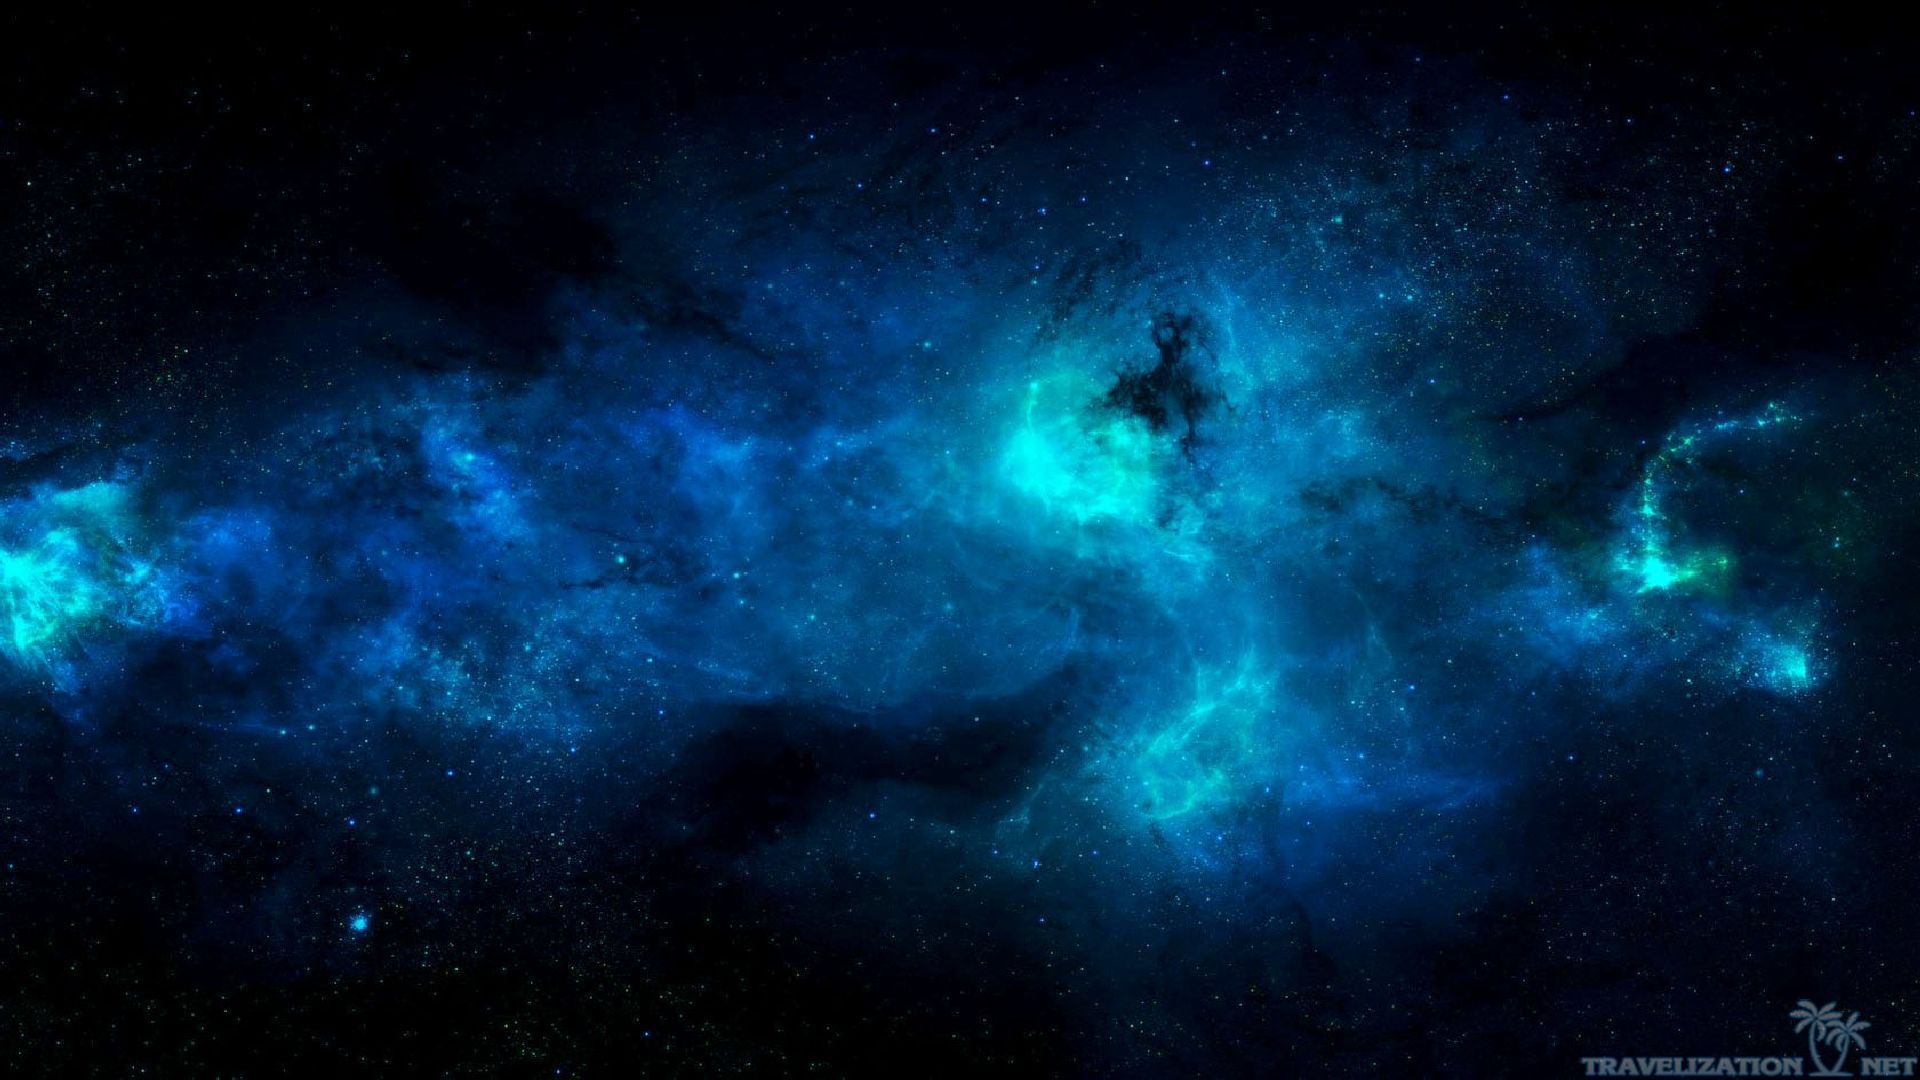 38+] Blue Space Galaxy Wallpaper Border - WallpaperSafari